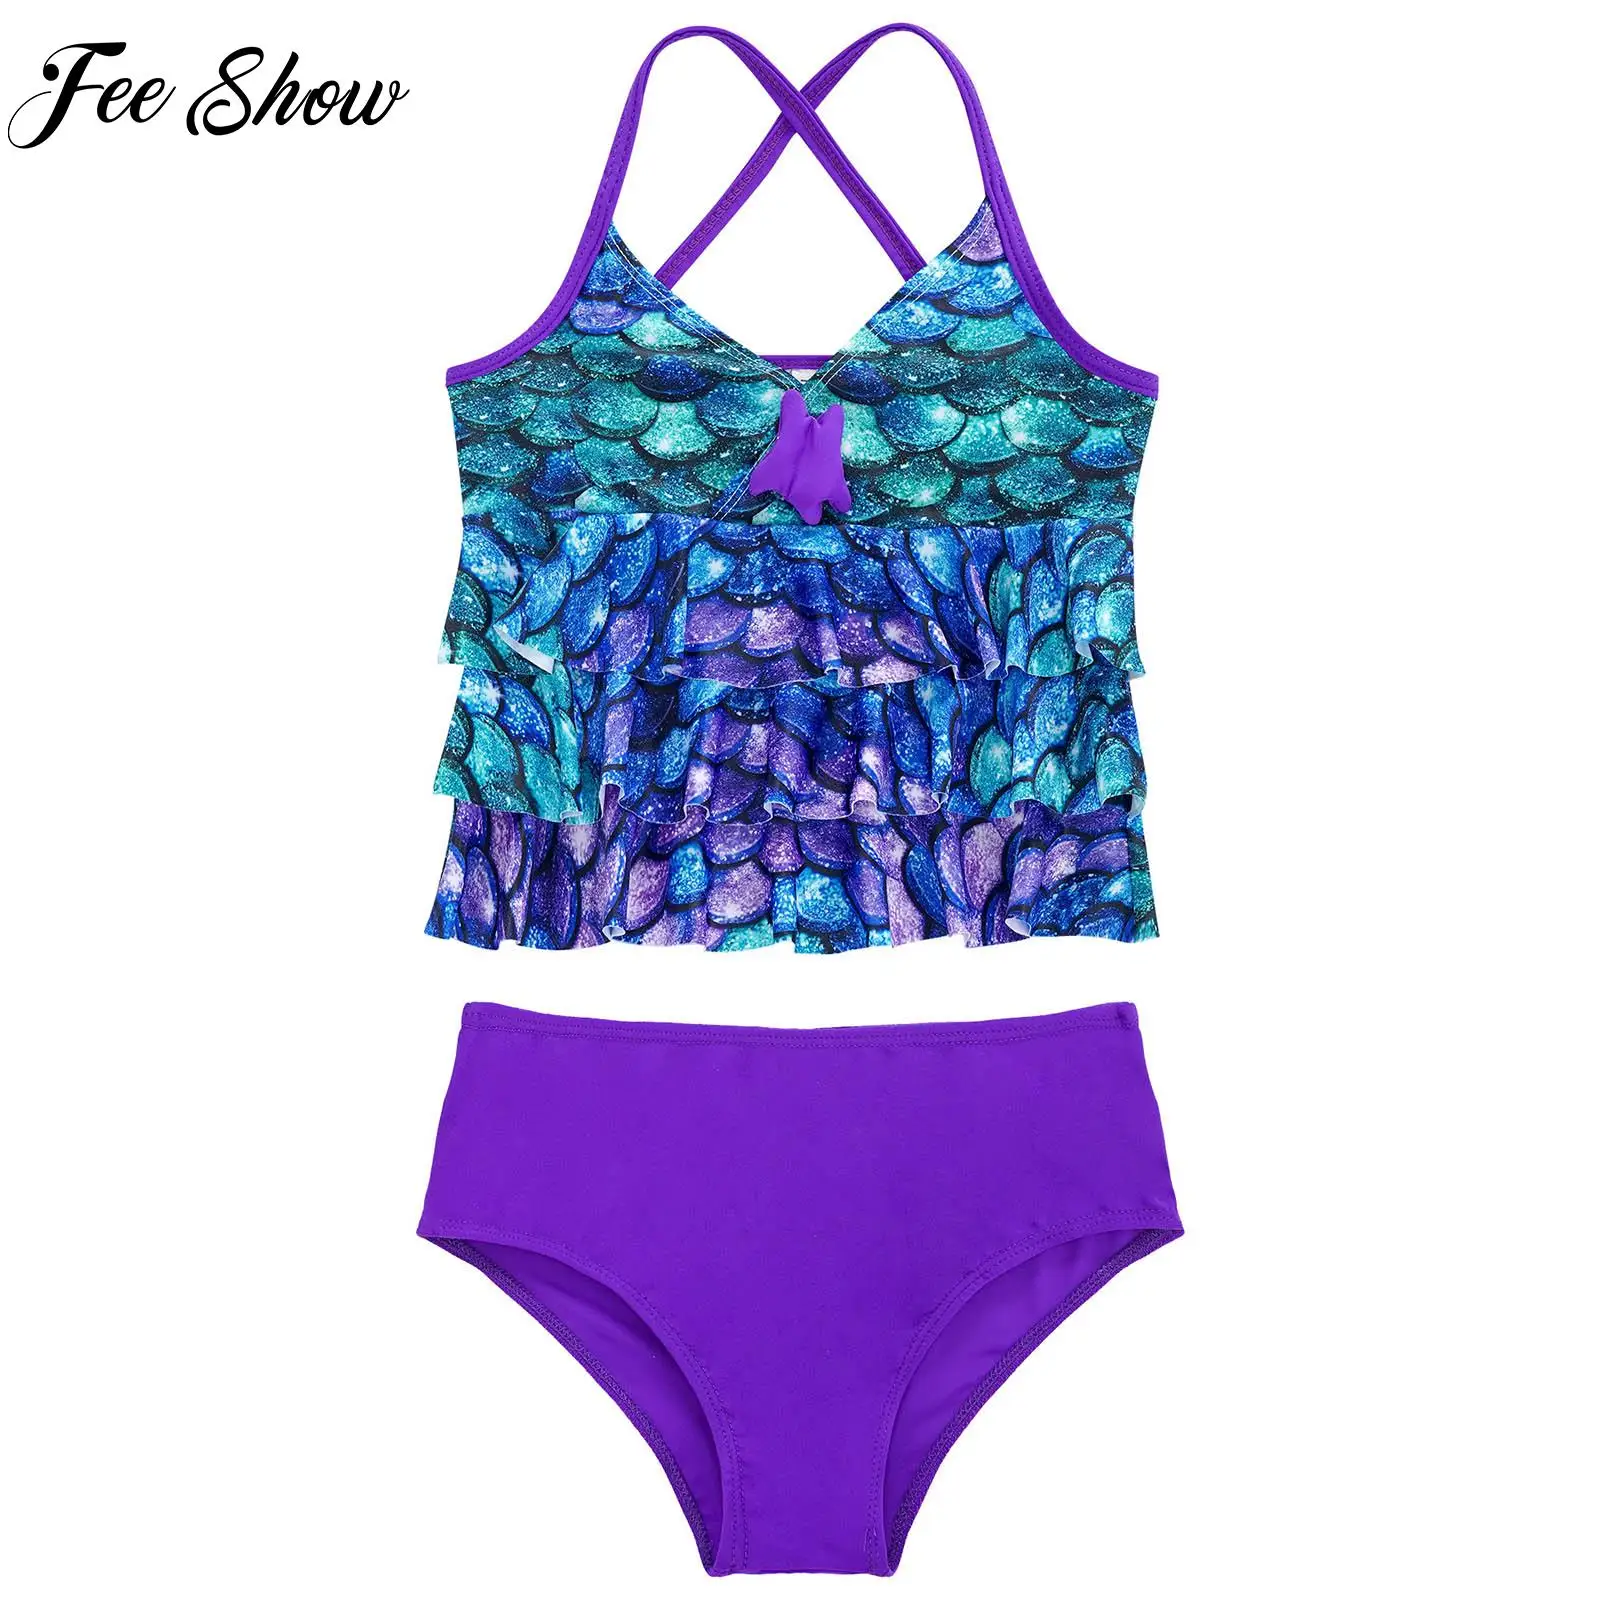 

Kids Girls Tankini Mermaid Scales Printed Starfish Bikini Swimsuit Swimwear Bathing Suit Set Tops with Bottoms Multi 2PCS